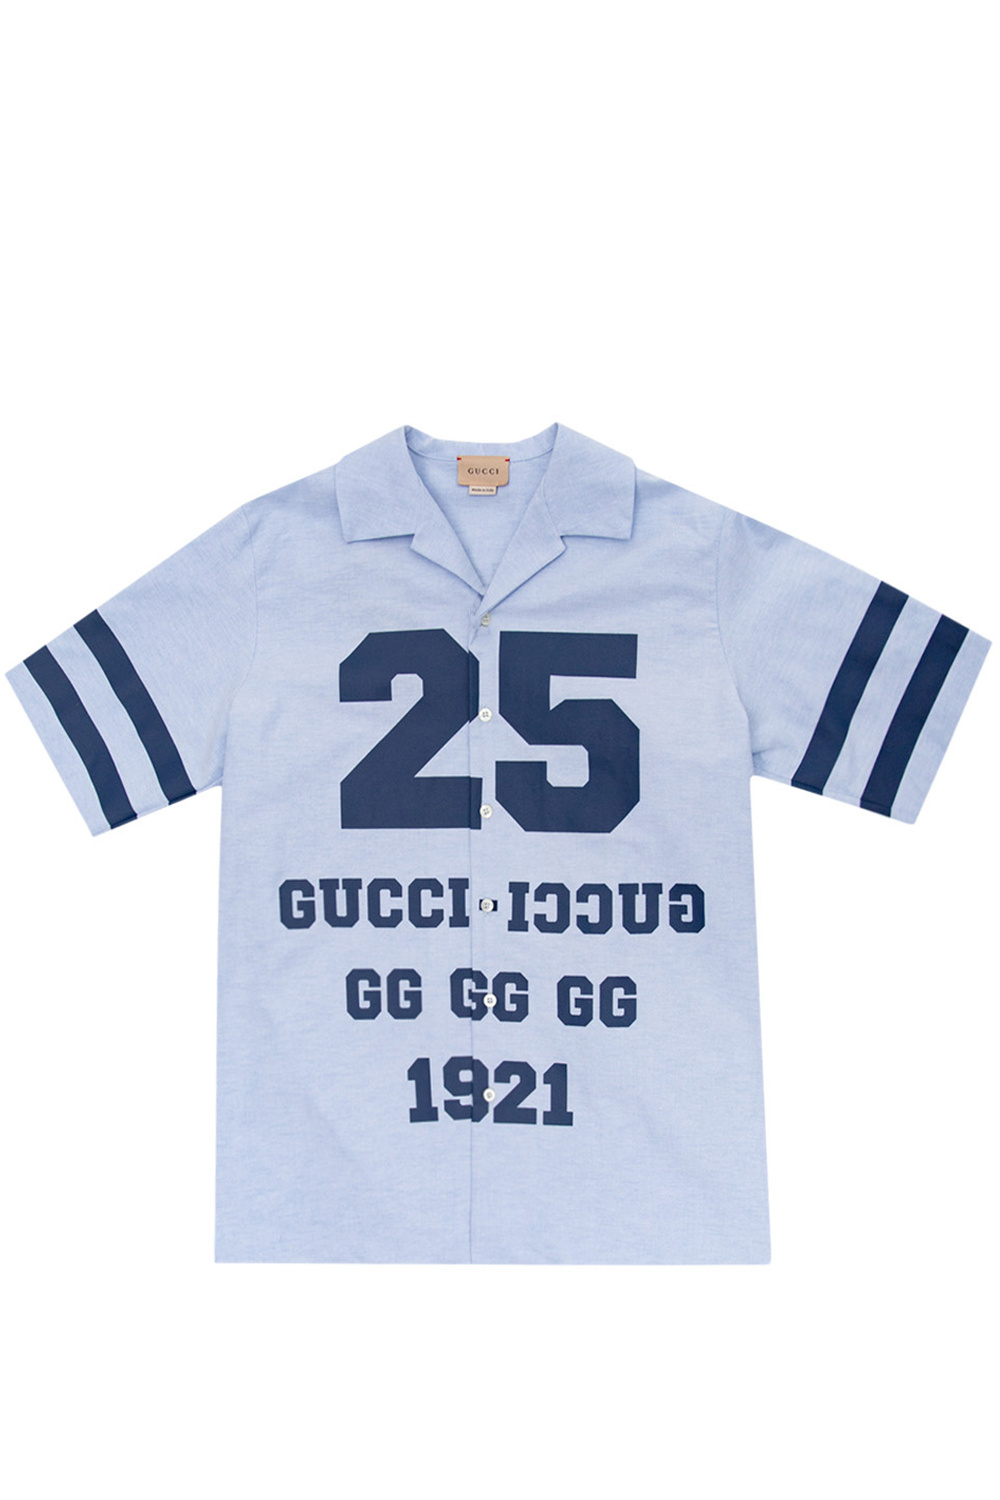 Gucci Kids ‘25 grip gucci 1921’ shirt with logo